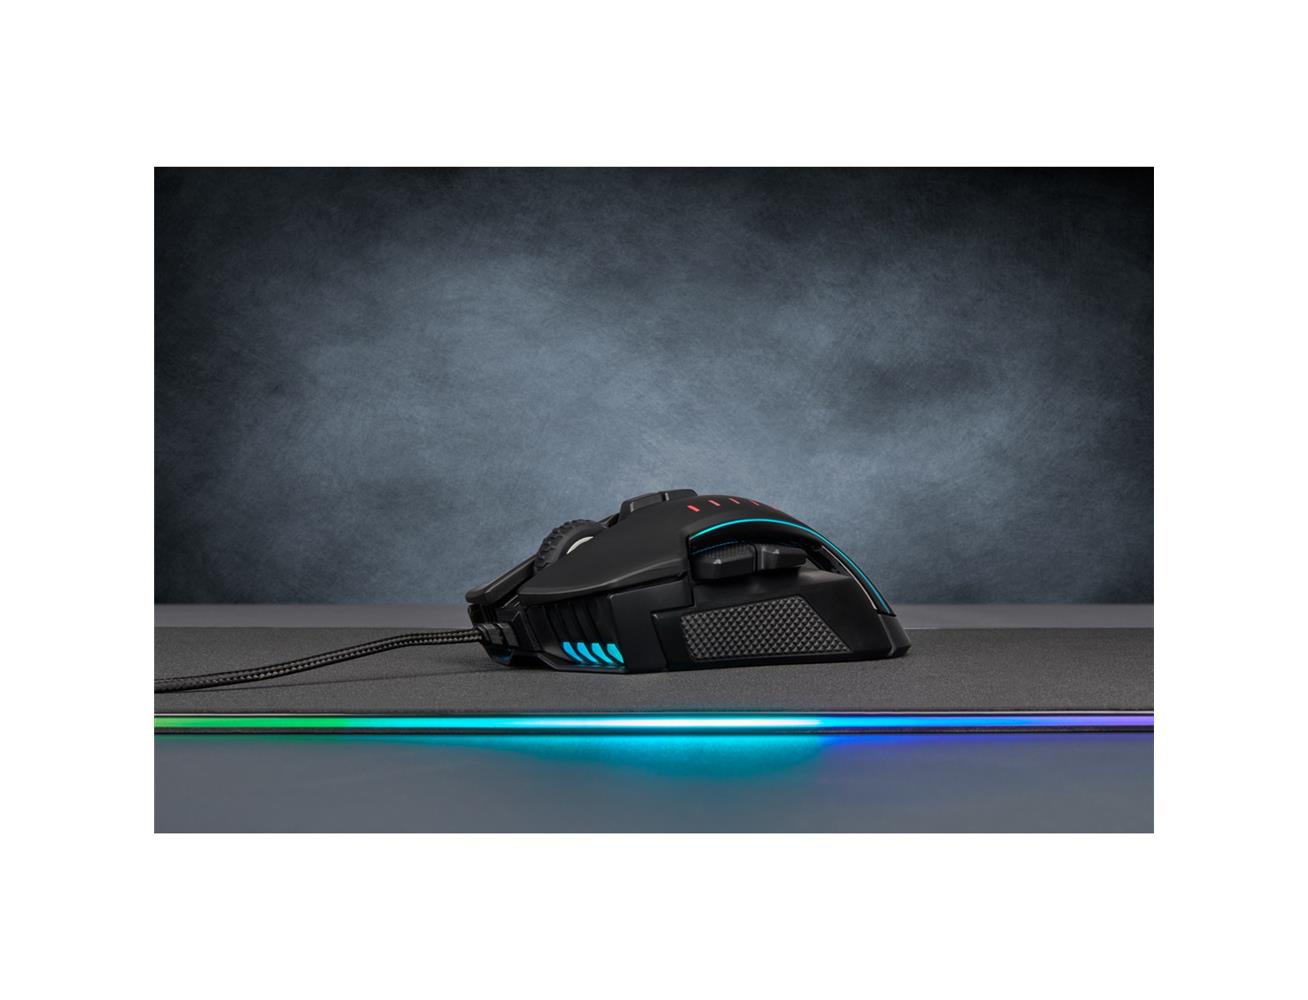 Corsair GLAIVE RGB PRO, Optical 18000 DPI Gaming Mouse - Black